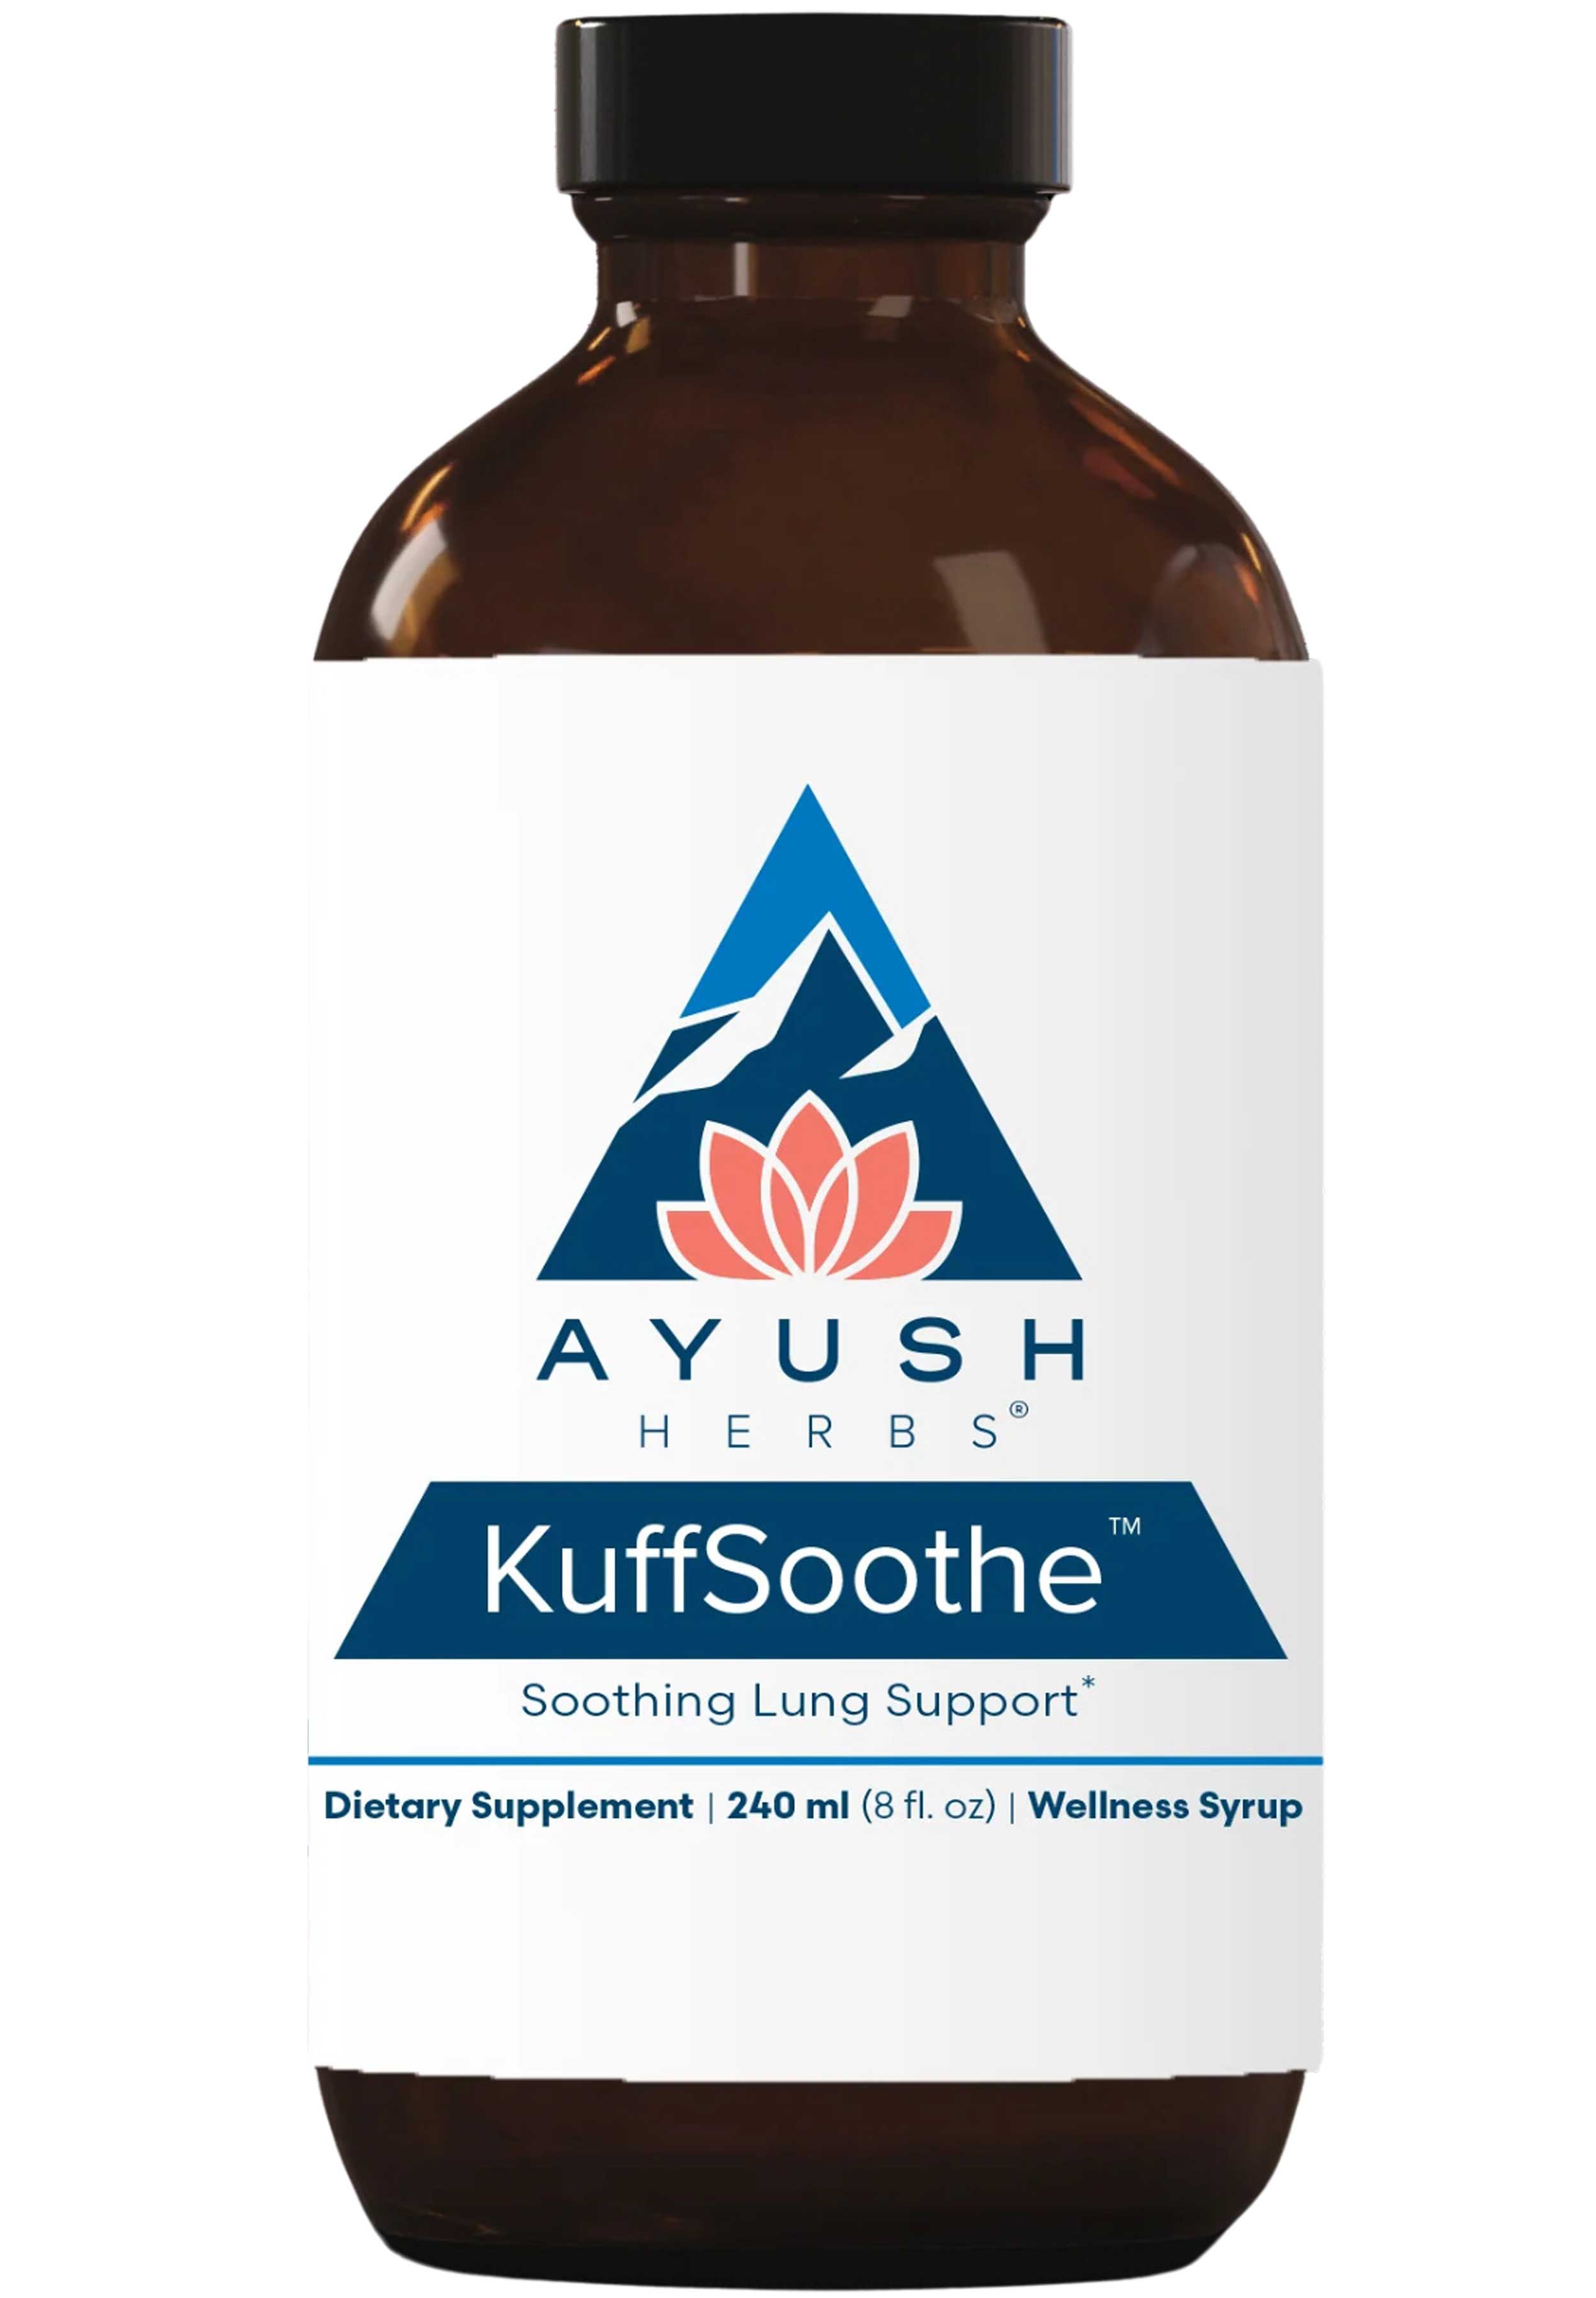 Ayush Herbs KuffSoothe